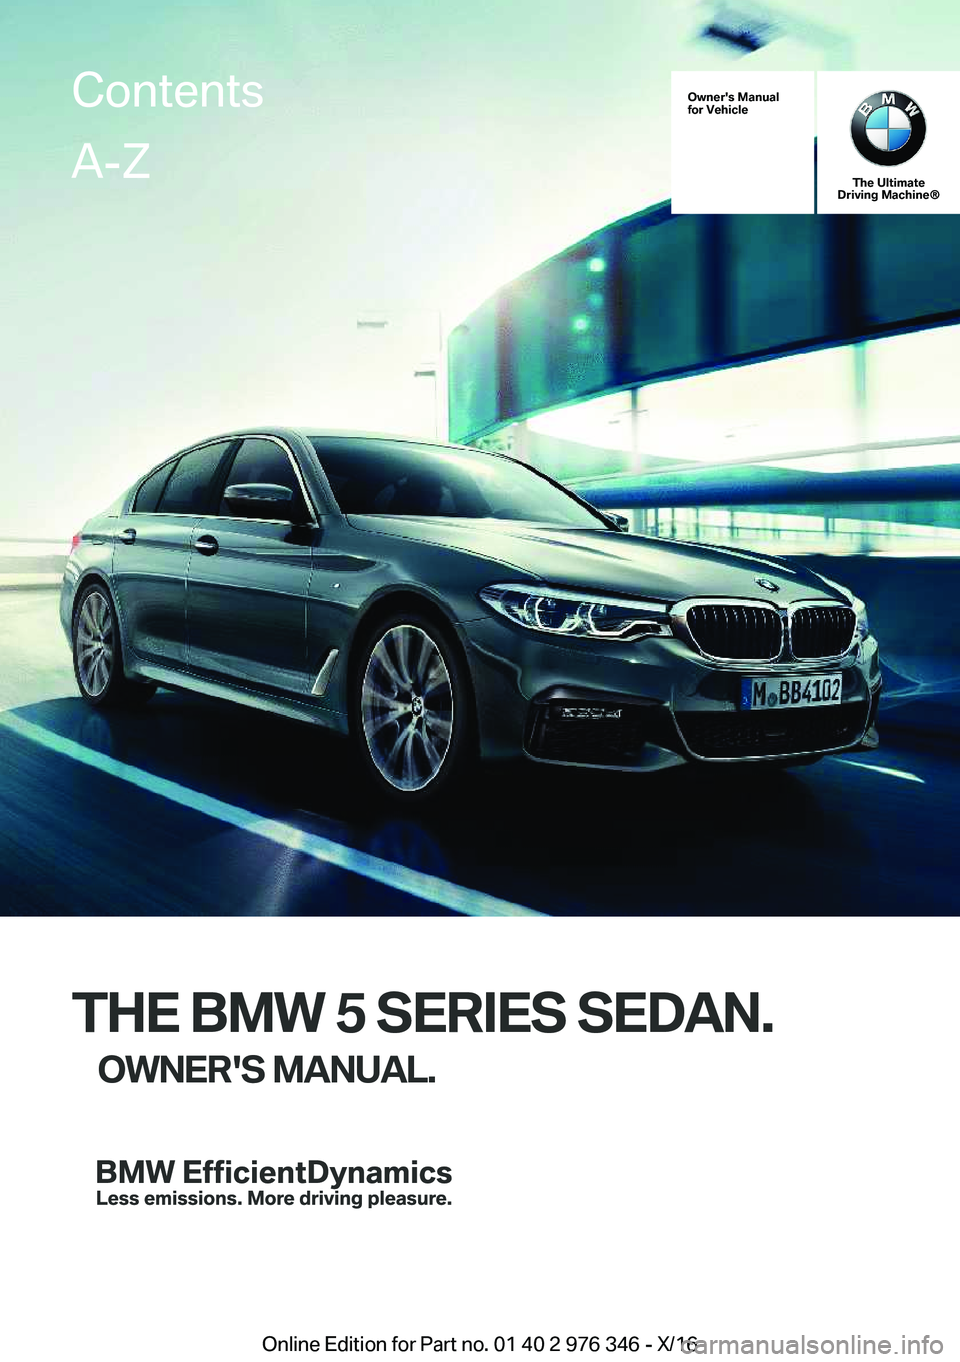 BMW 5 SERIES 2017  Owners Manual �O�w�n�e�r�'�s��M�a�n�u�a�l
�f�o�r��V�e�h�i�c�l�e
�T�h�e��U�l�t�i�m�a�t�e
�D�r�i�v�i�n�g��M�a�c�h�i�n�e�n
�T�H�E��B�M�W��5��S�E�R�I�E�S��S�E�D�A�N�.
�O�W�N�E�R�'�S��M�A�N�U�A�L�.
�C�o